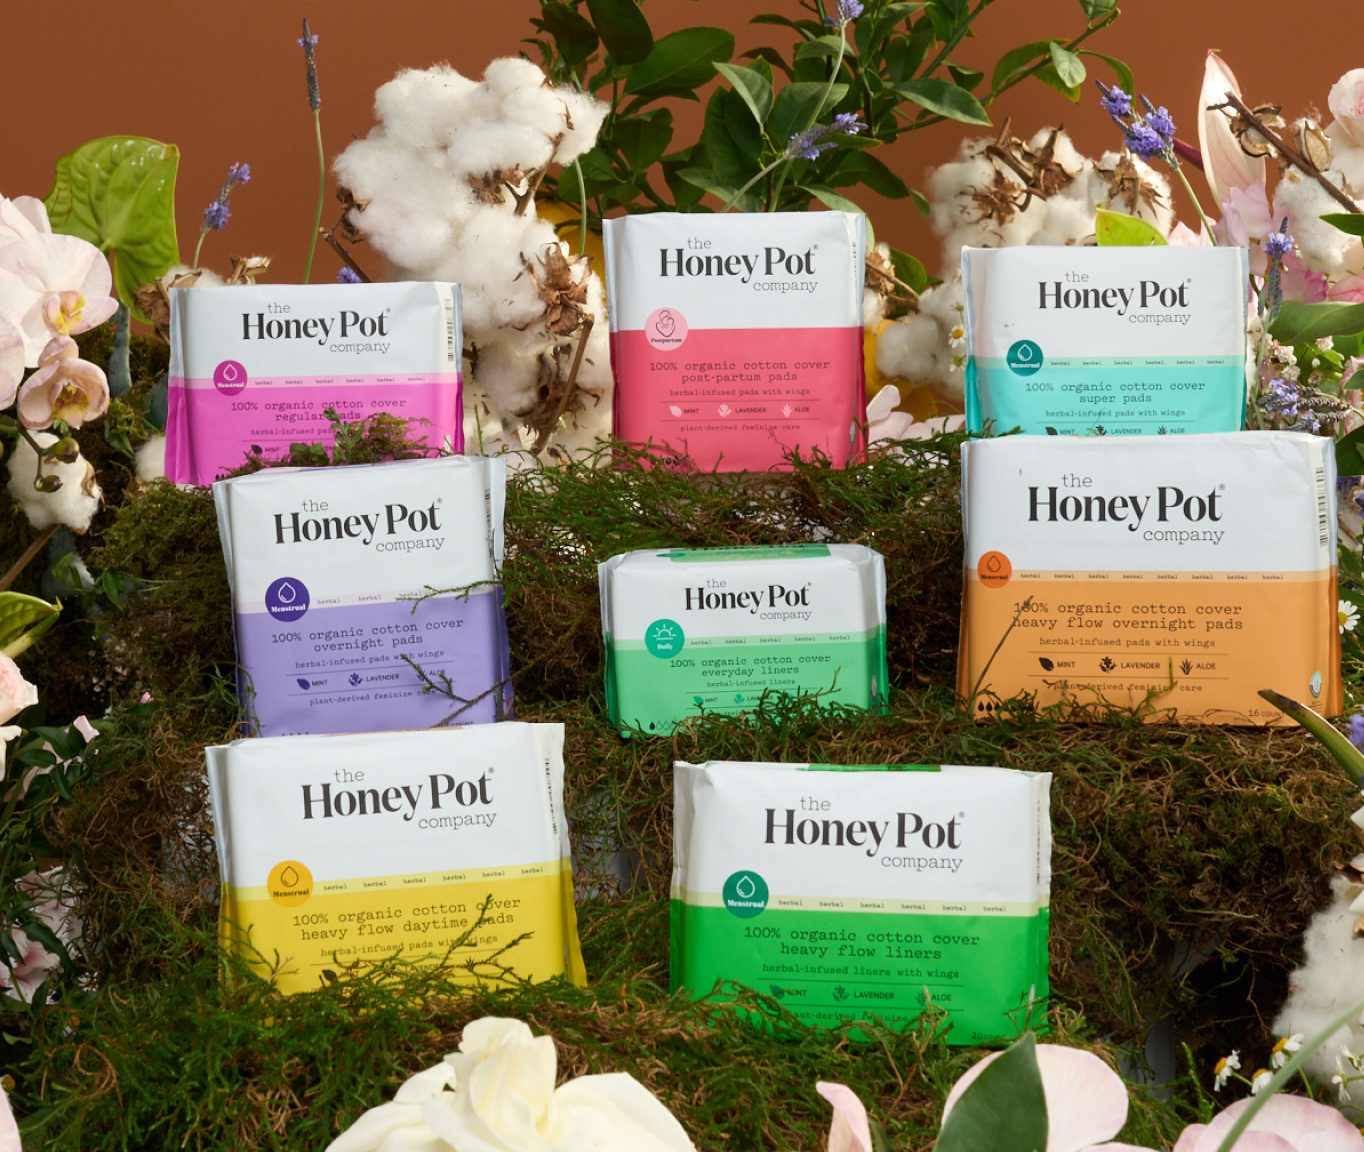 Buy The Honey Pot Postpartum Pads